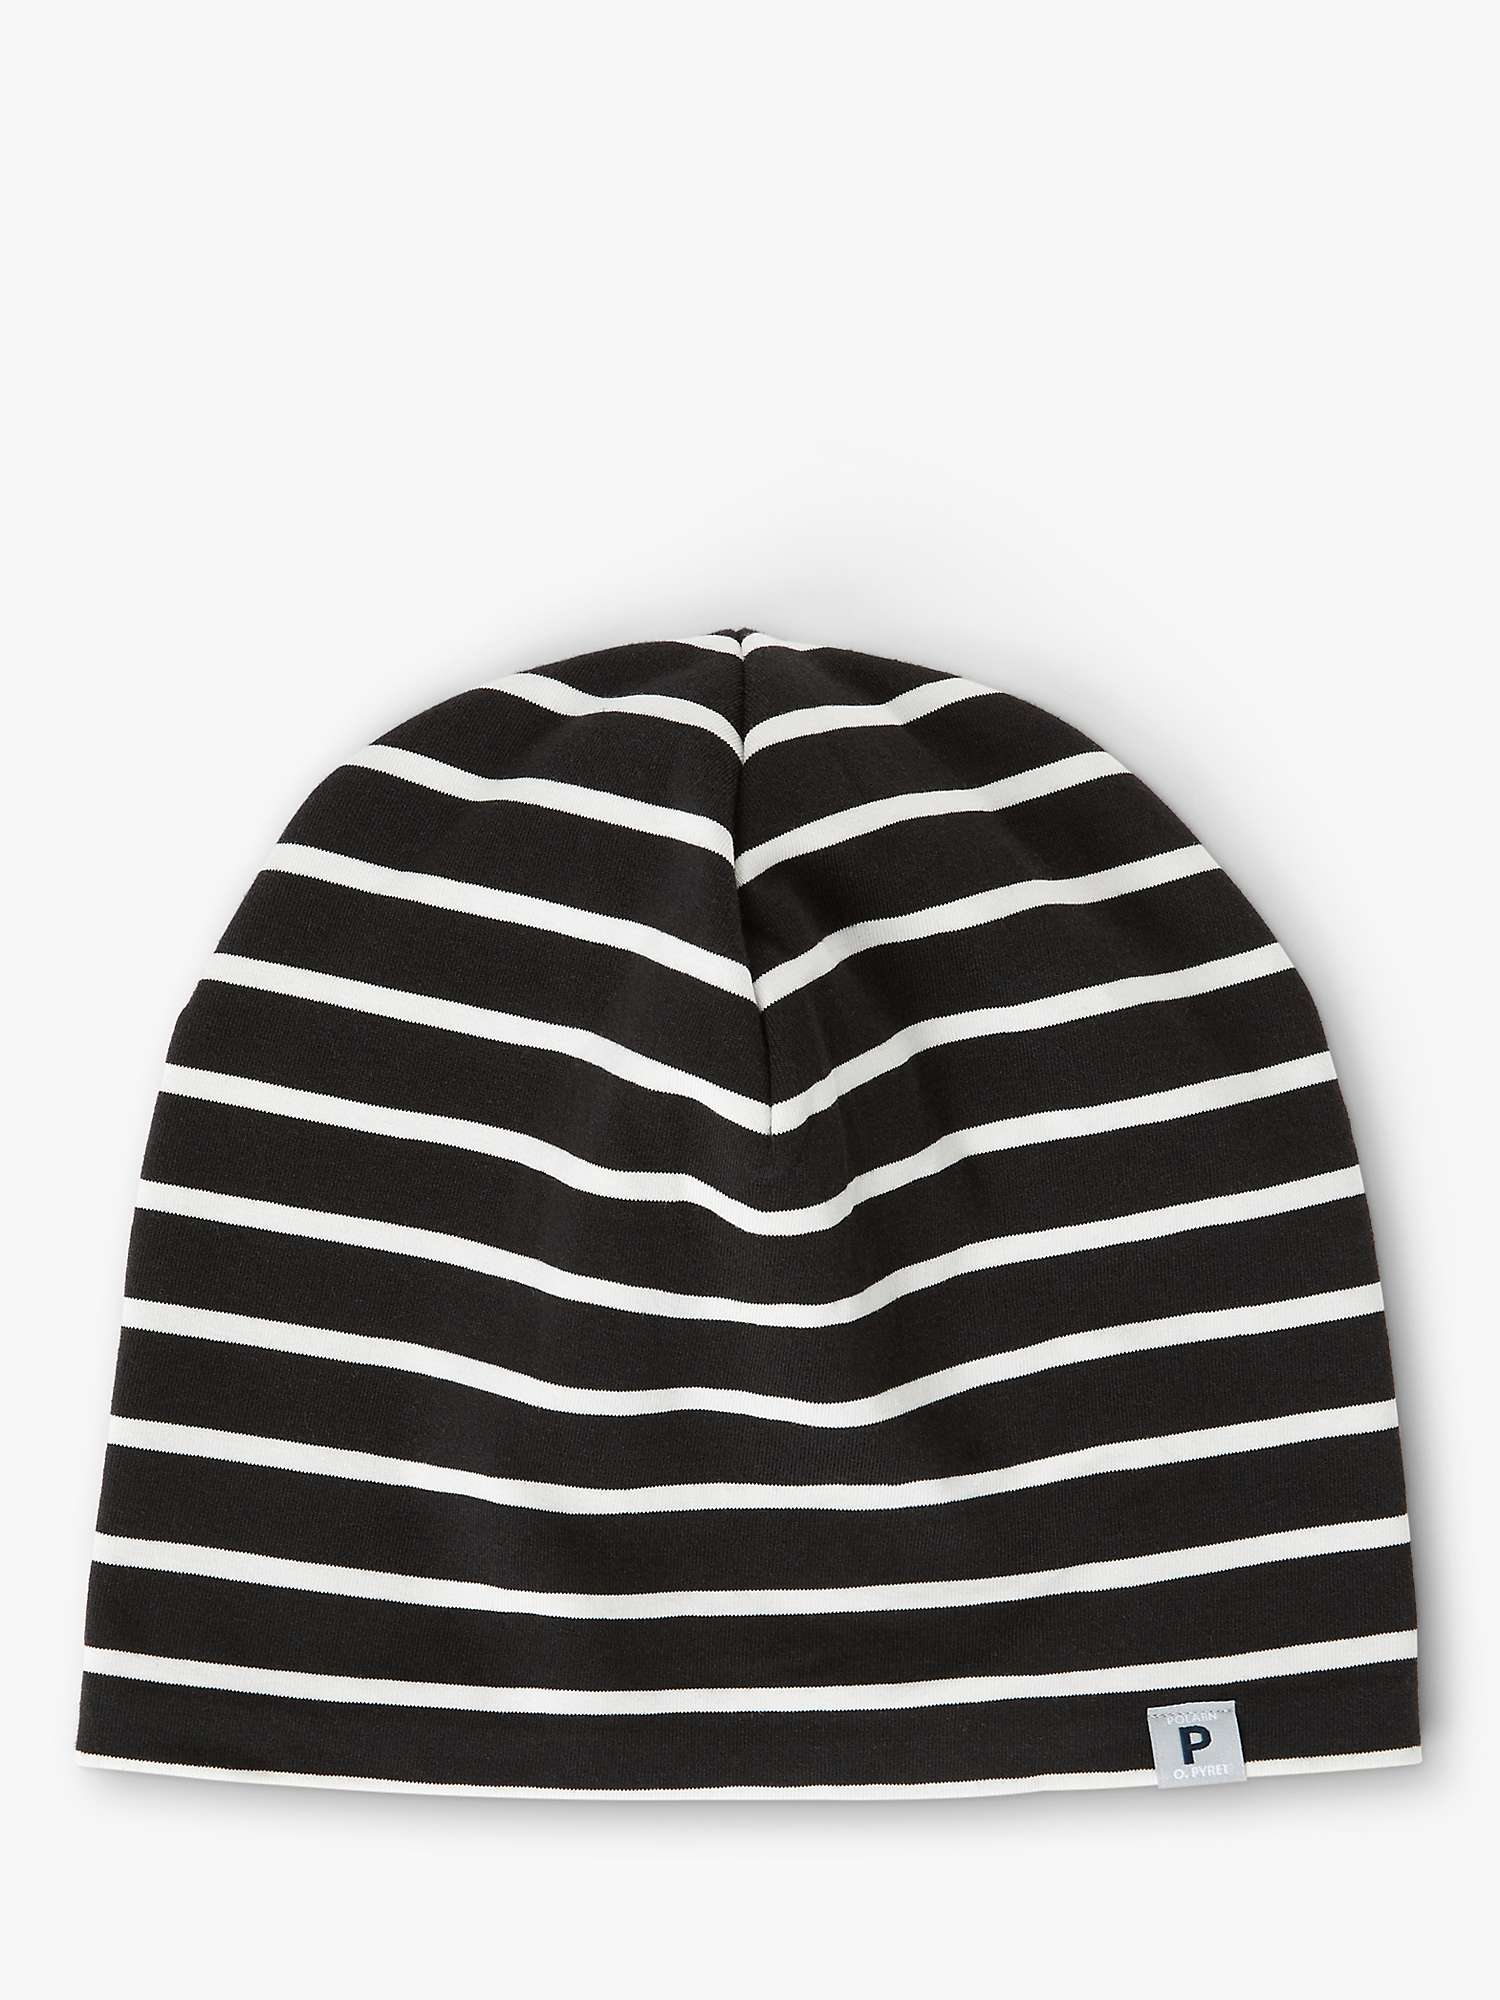 Buy Polarn O. Pyret Kids' Striped Beanie Hat, Blue/White Online at johnlewis.com